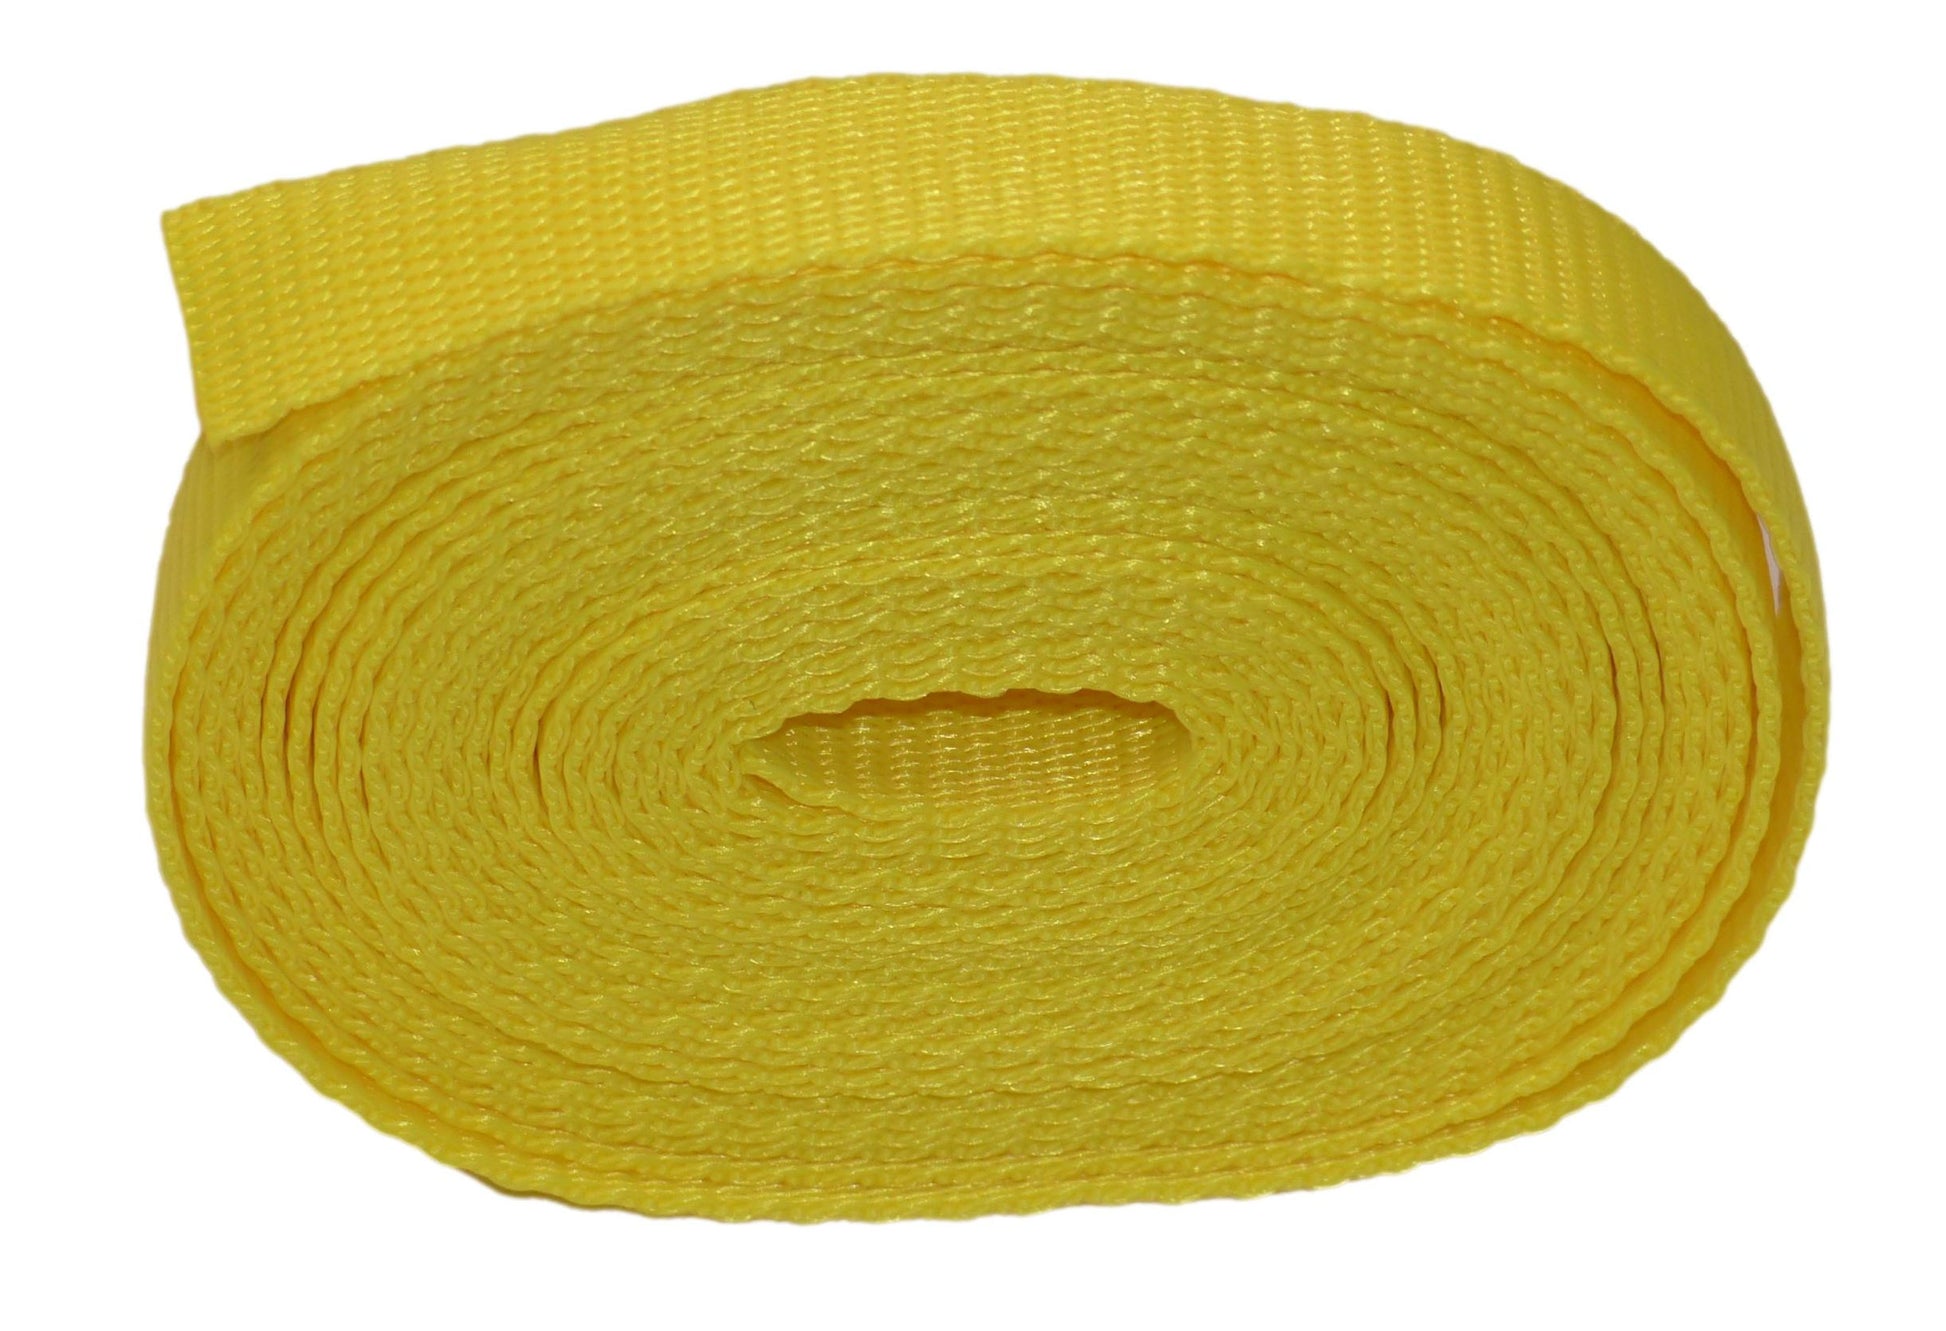 19mm polypropylene webbing in yellow